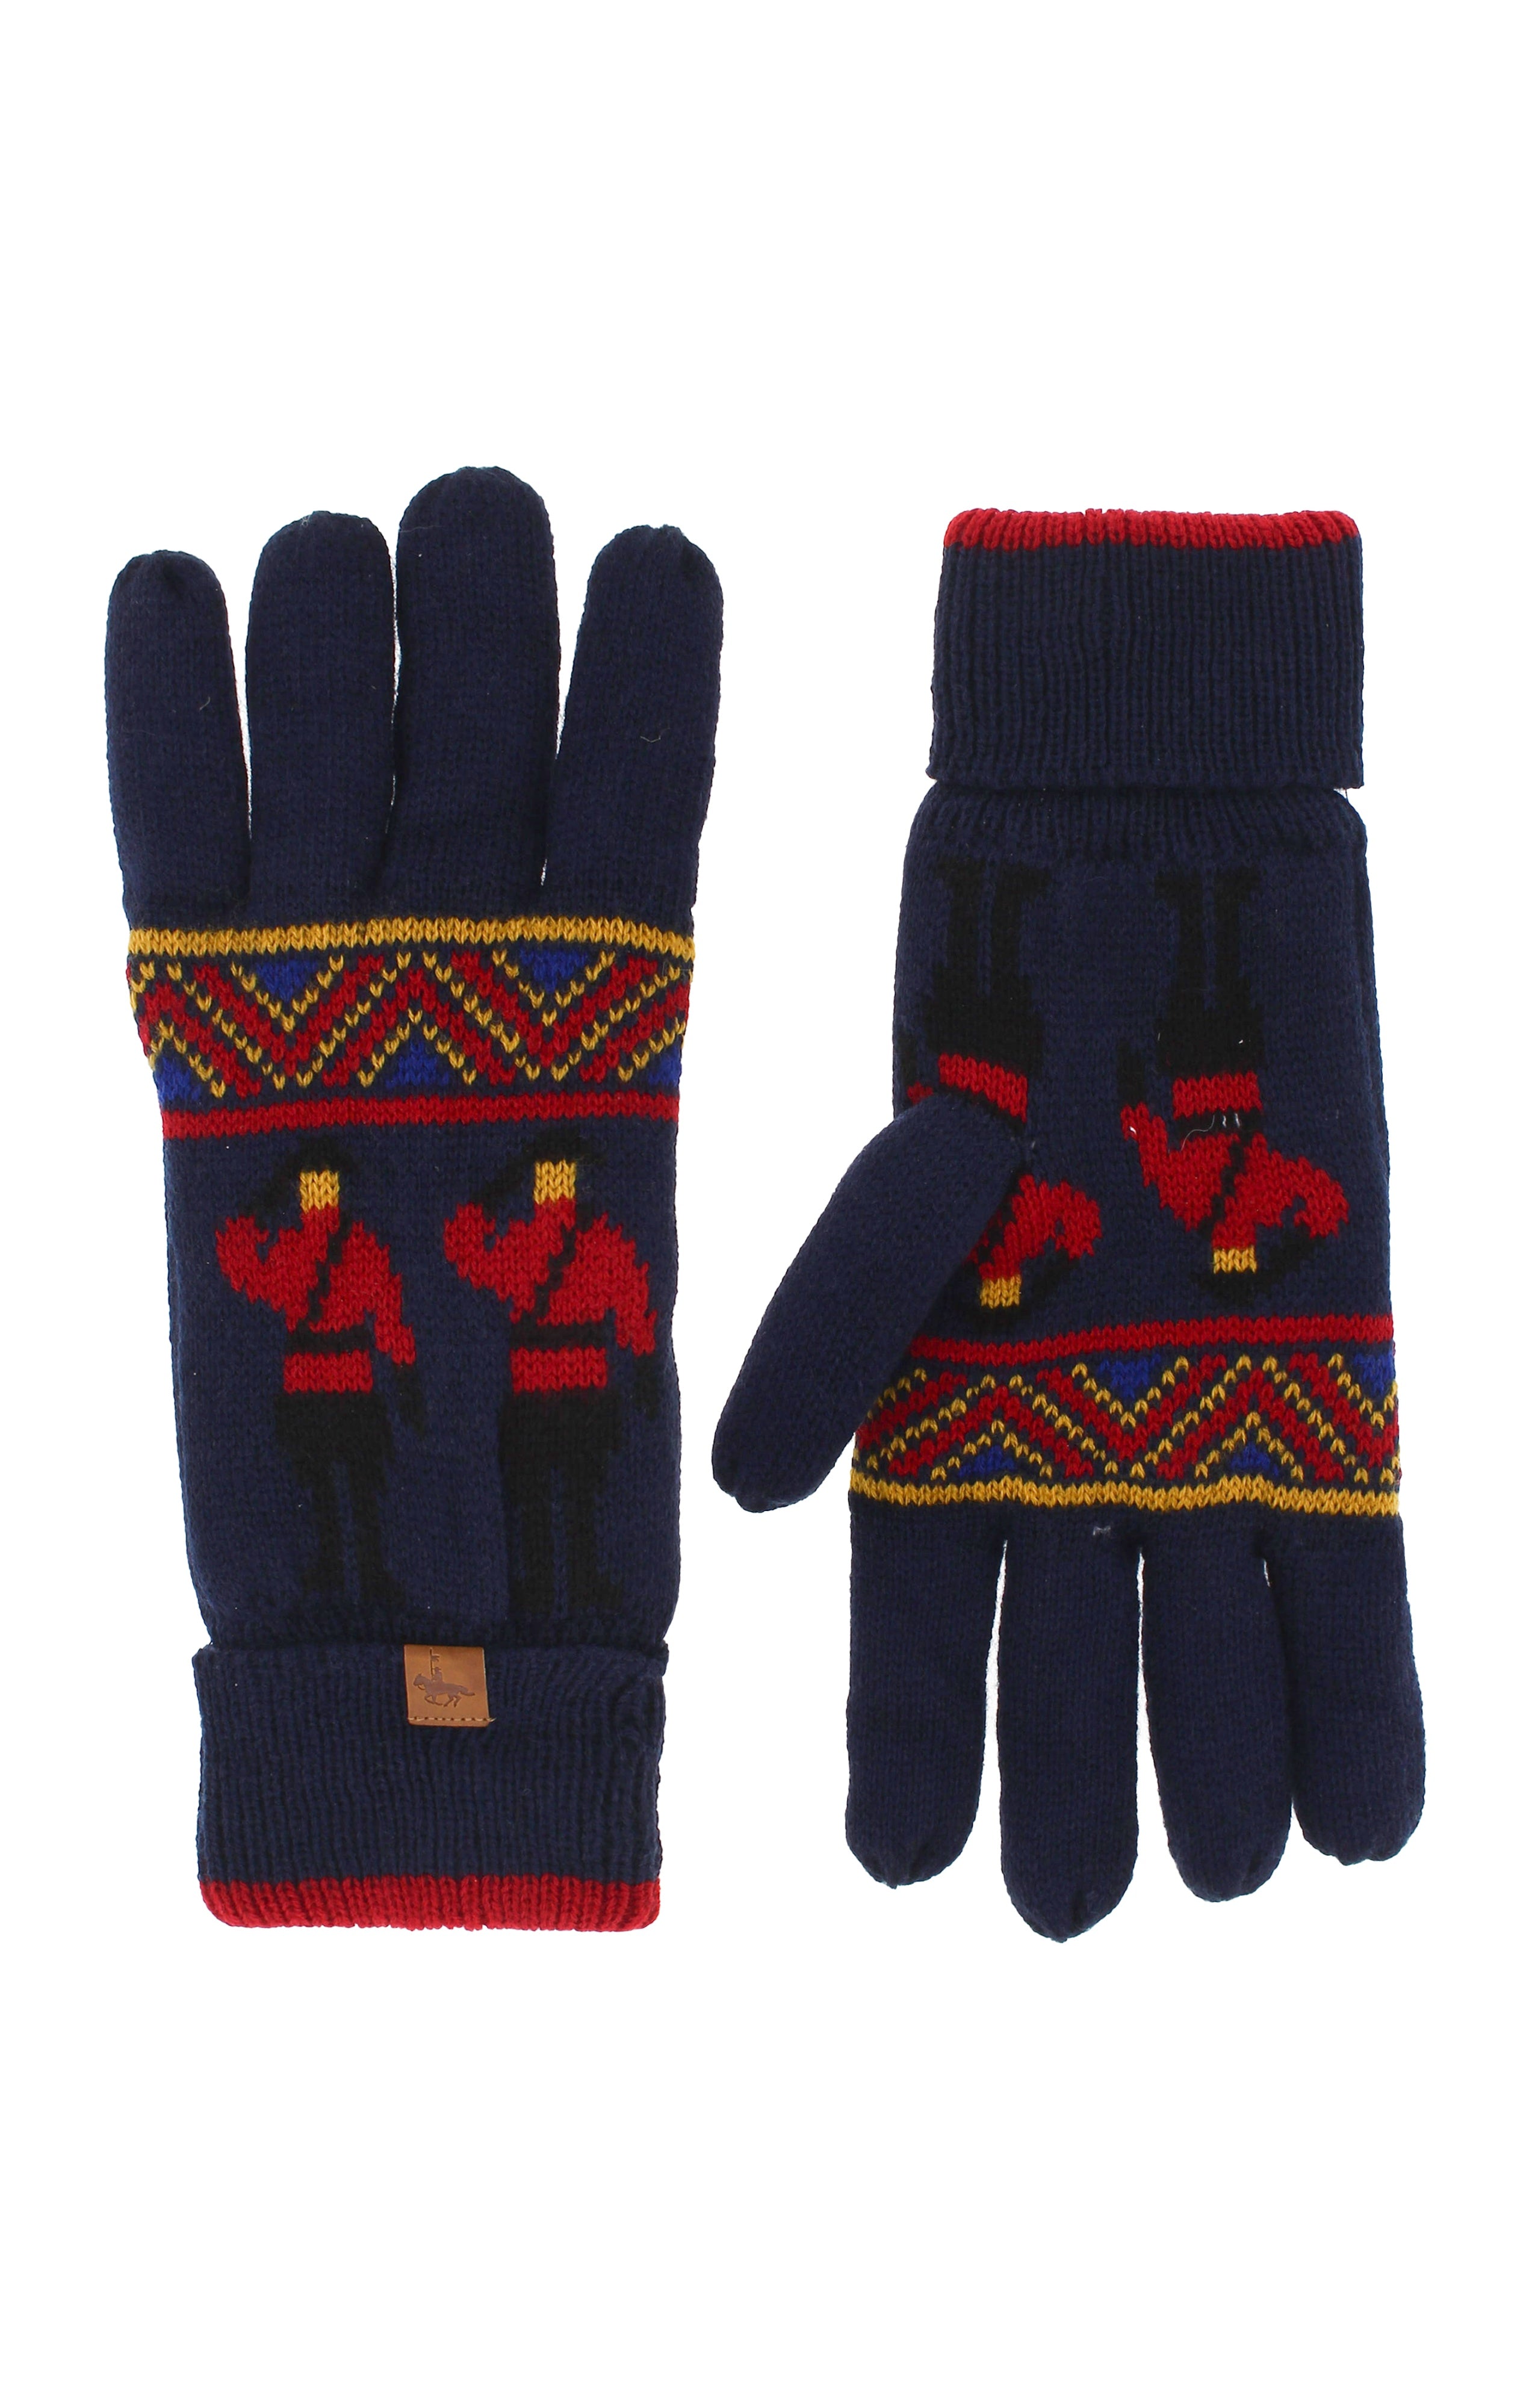 RCMP Men's Thermal Winter Gloves